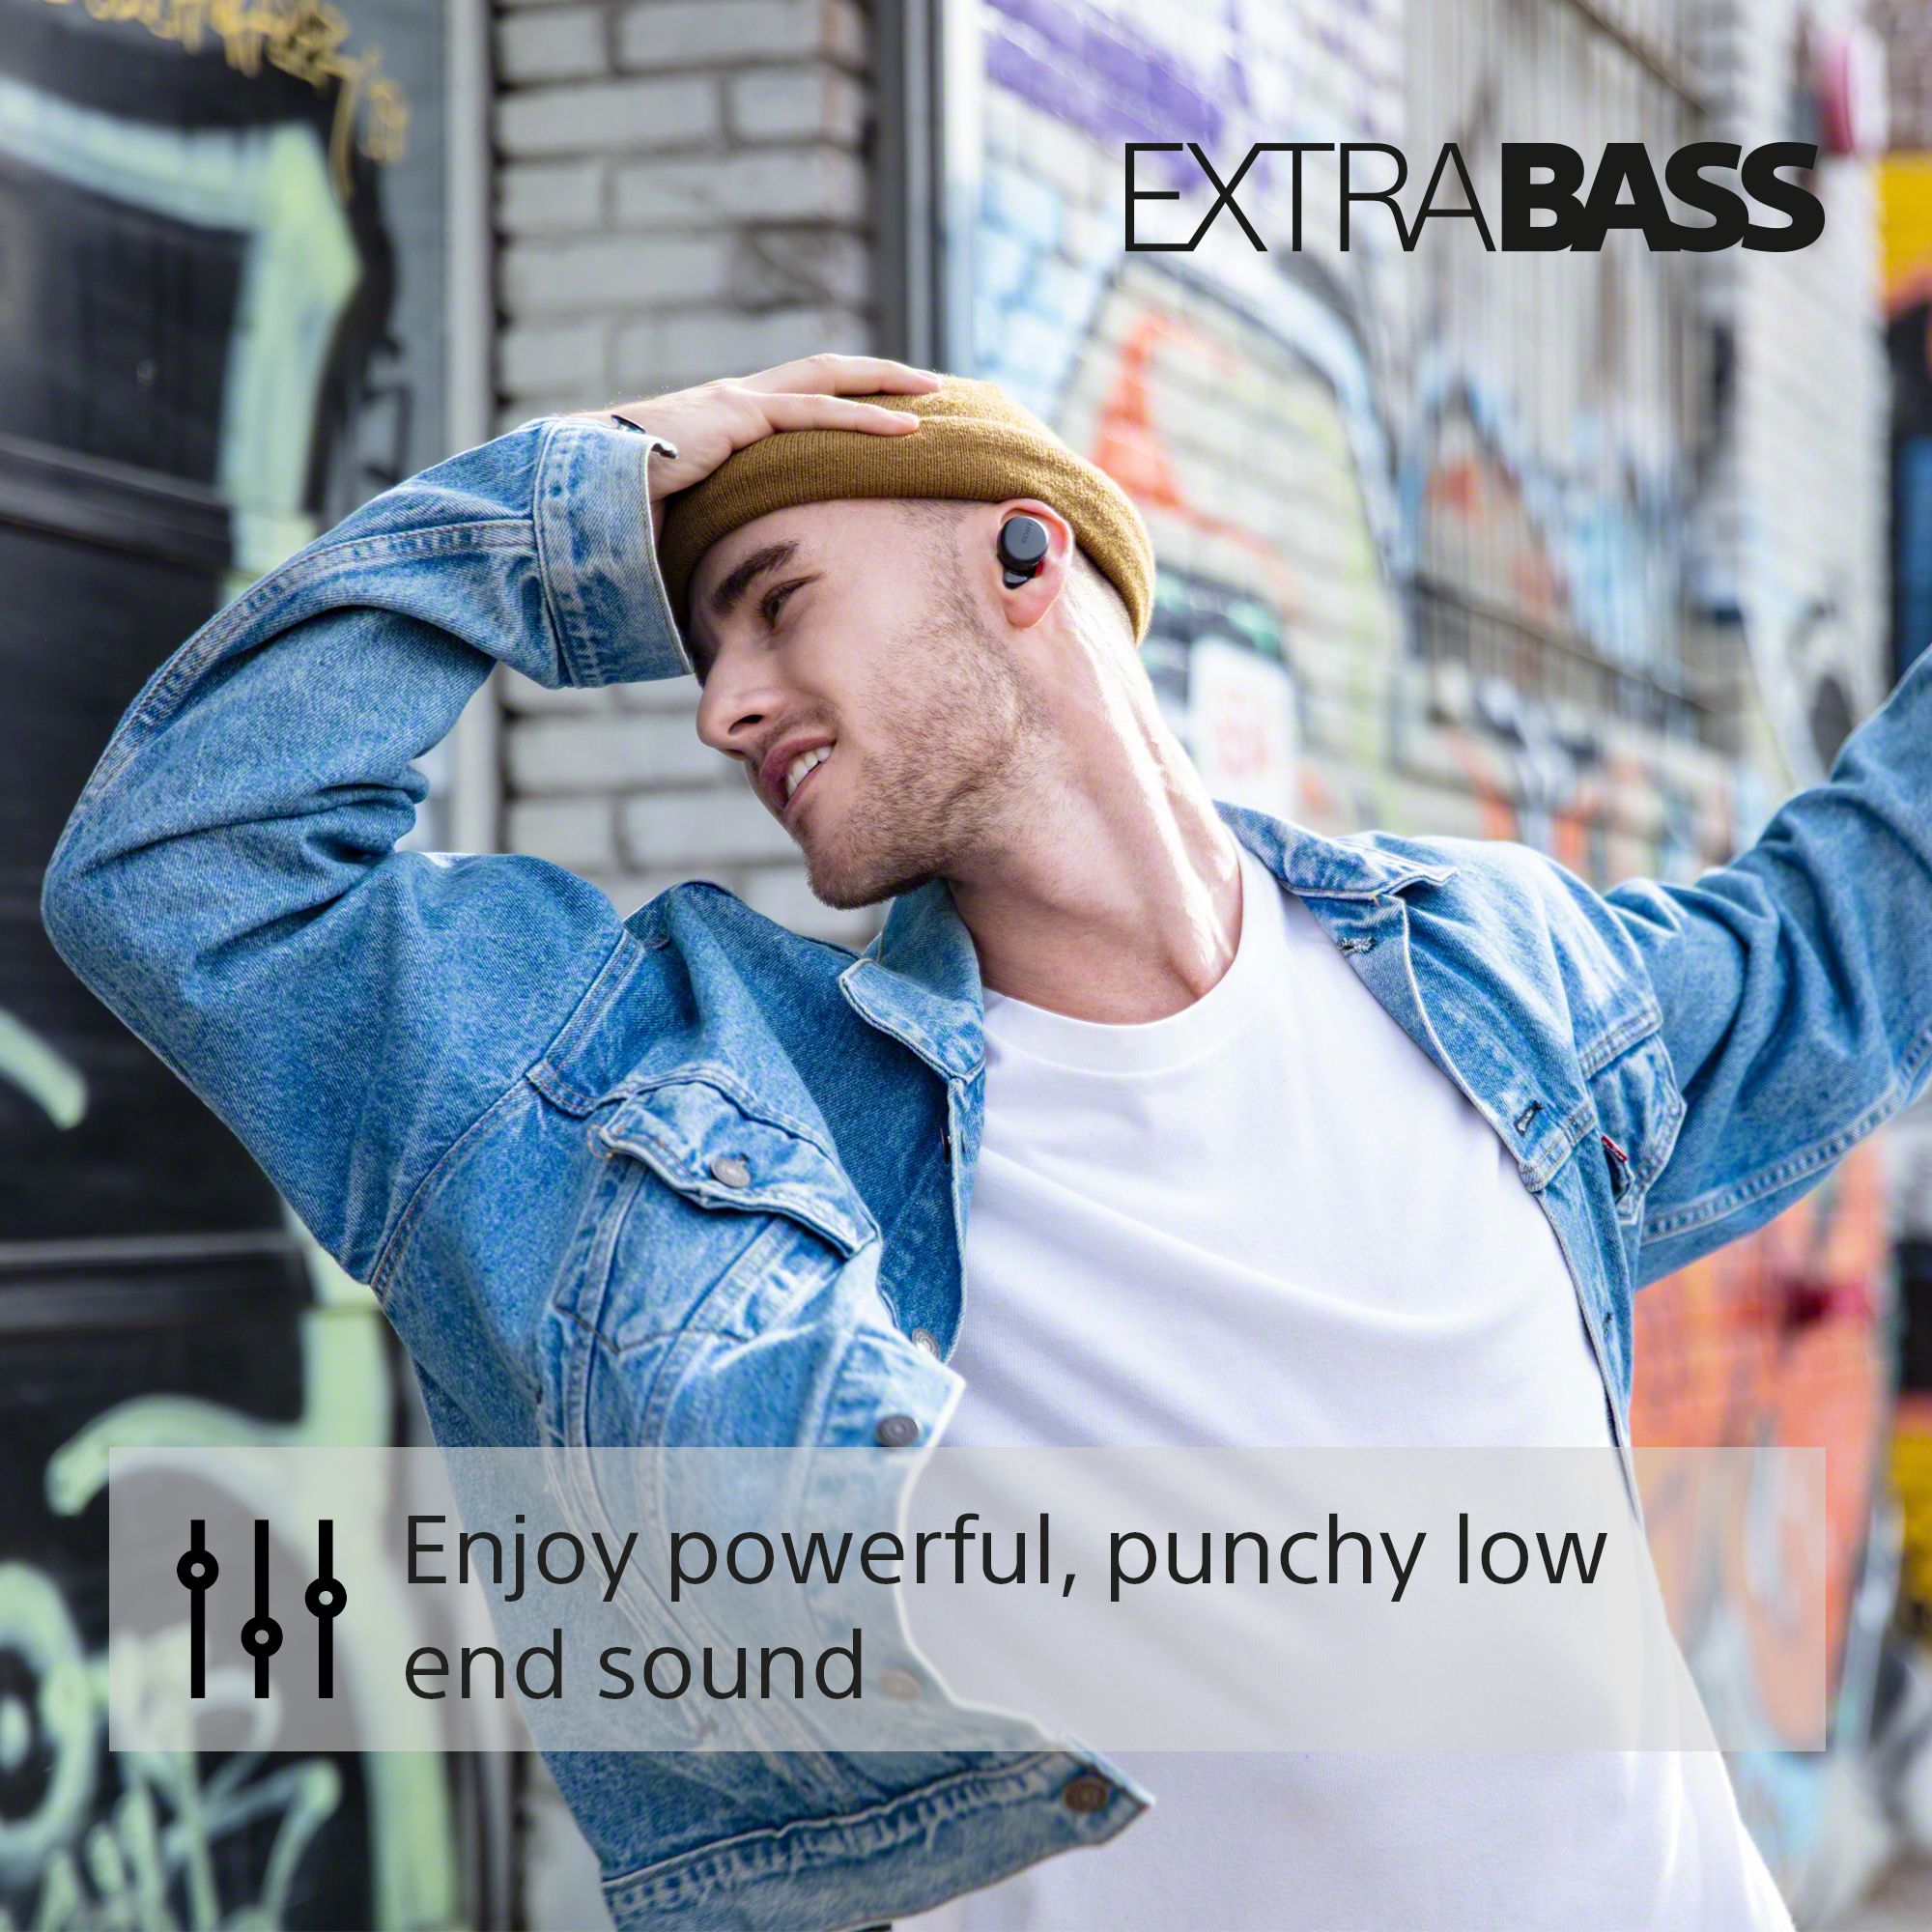 Enjoy powerful, punchy low end sound